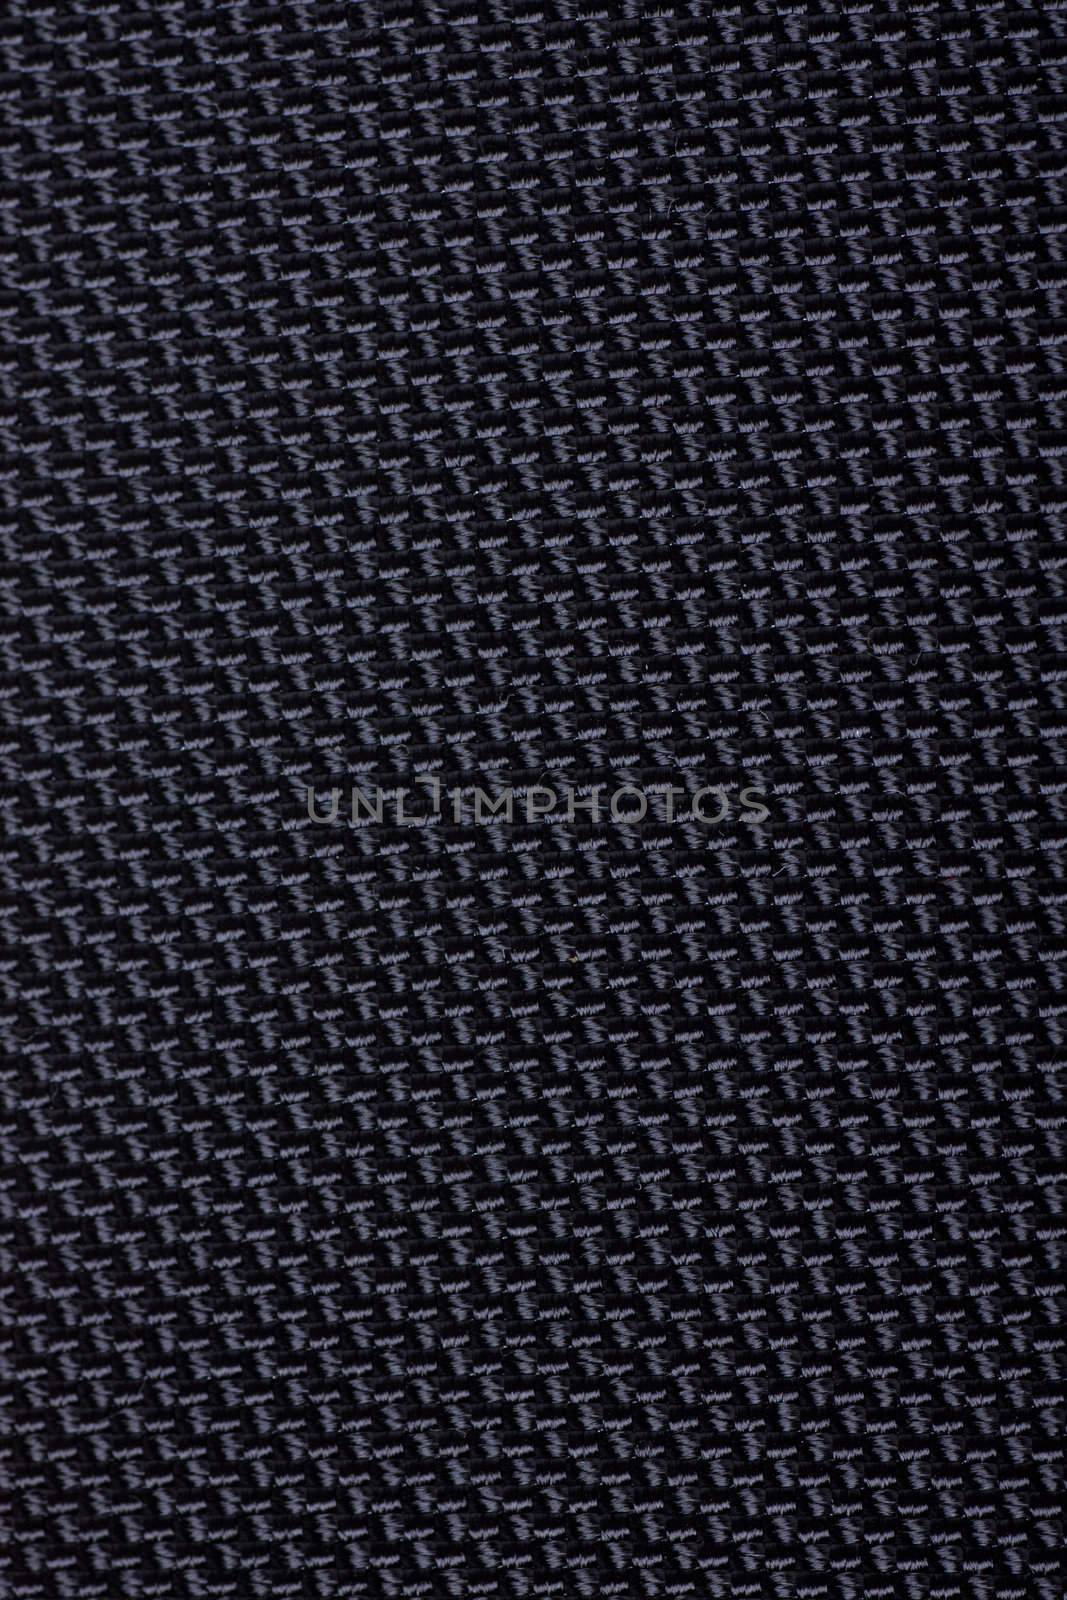 Black textile fabric pattern. Macro view.